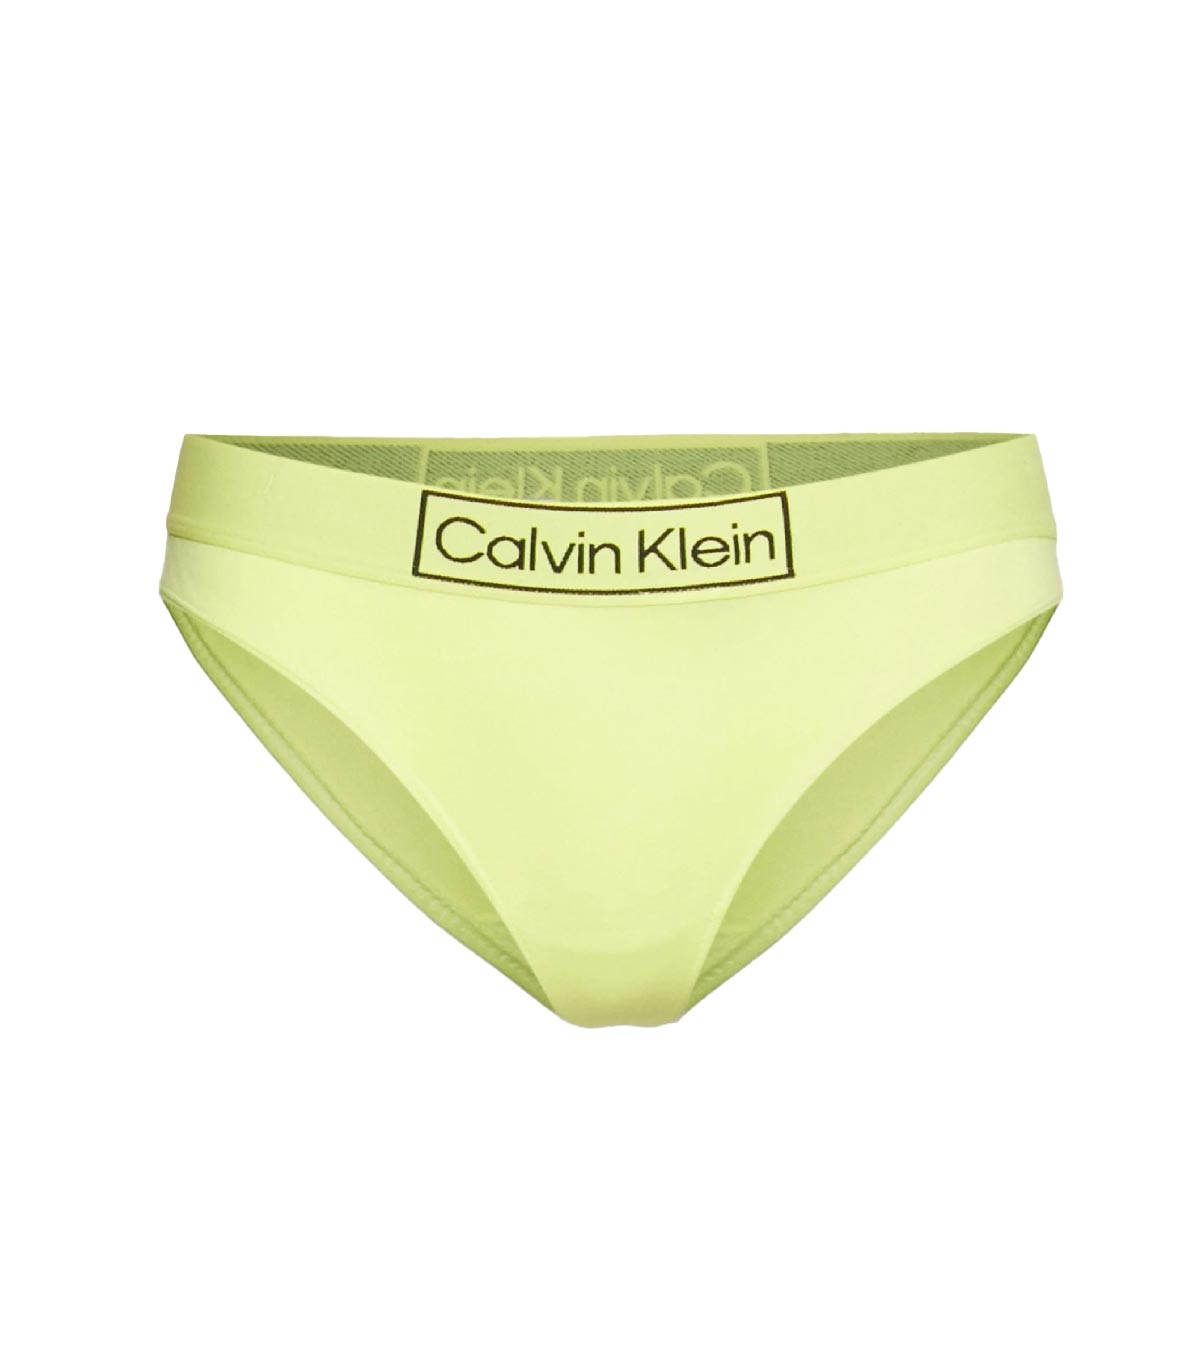 Calvin Klein - Tanga Thong - Verde